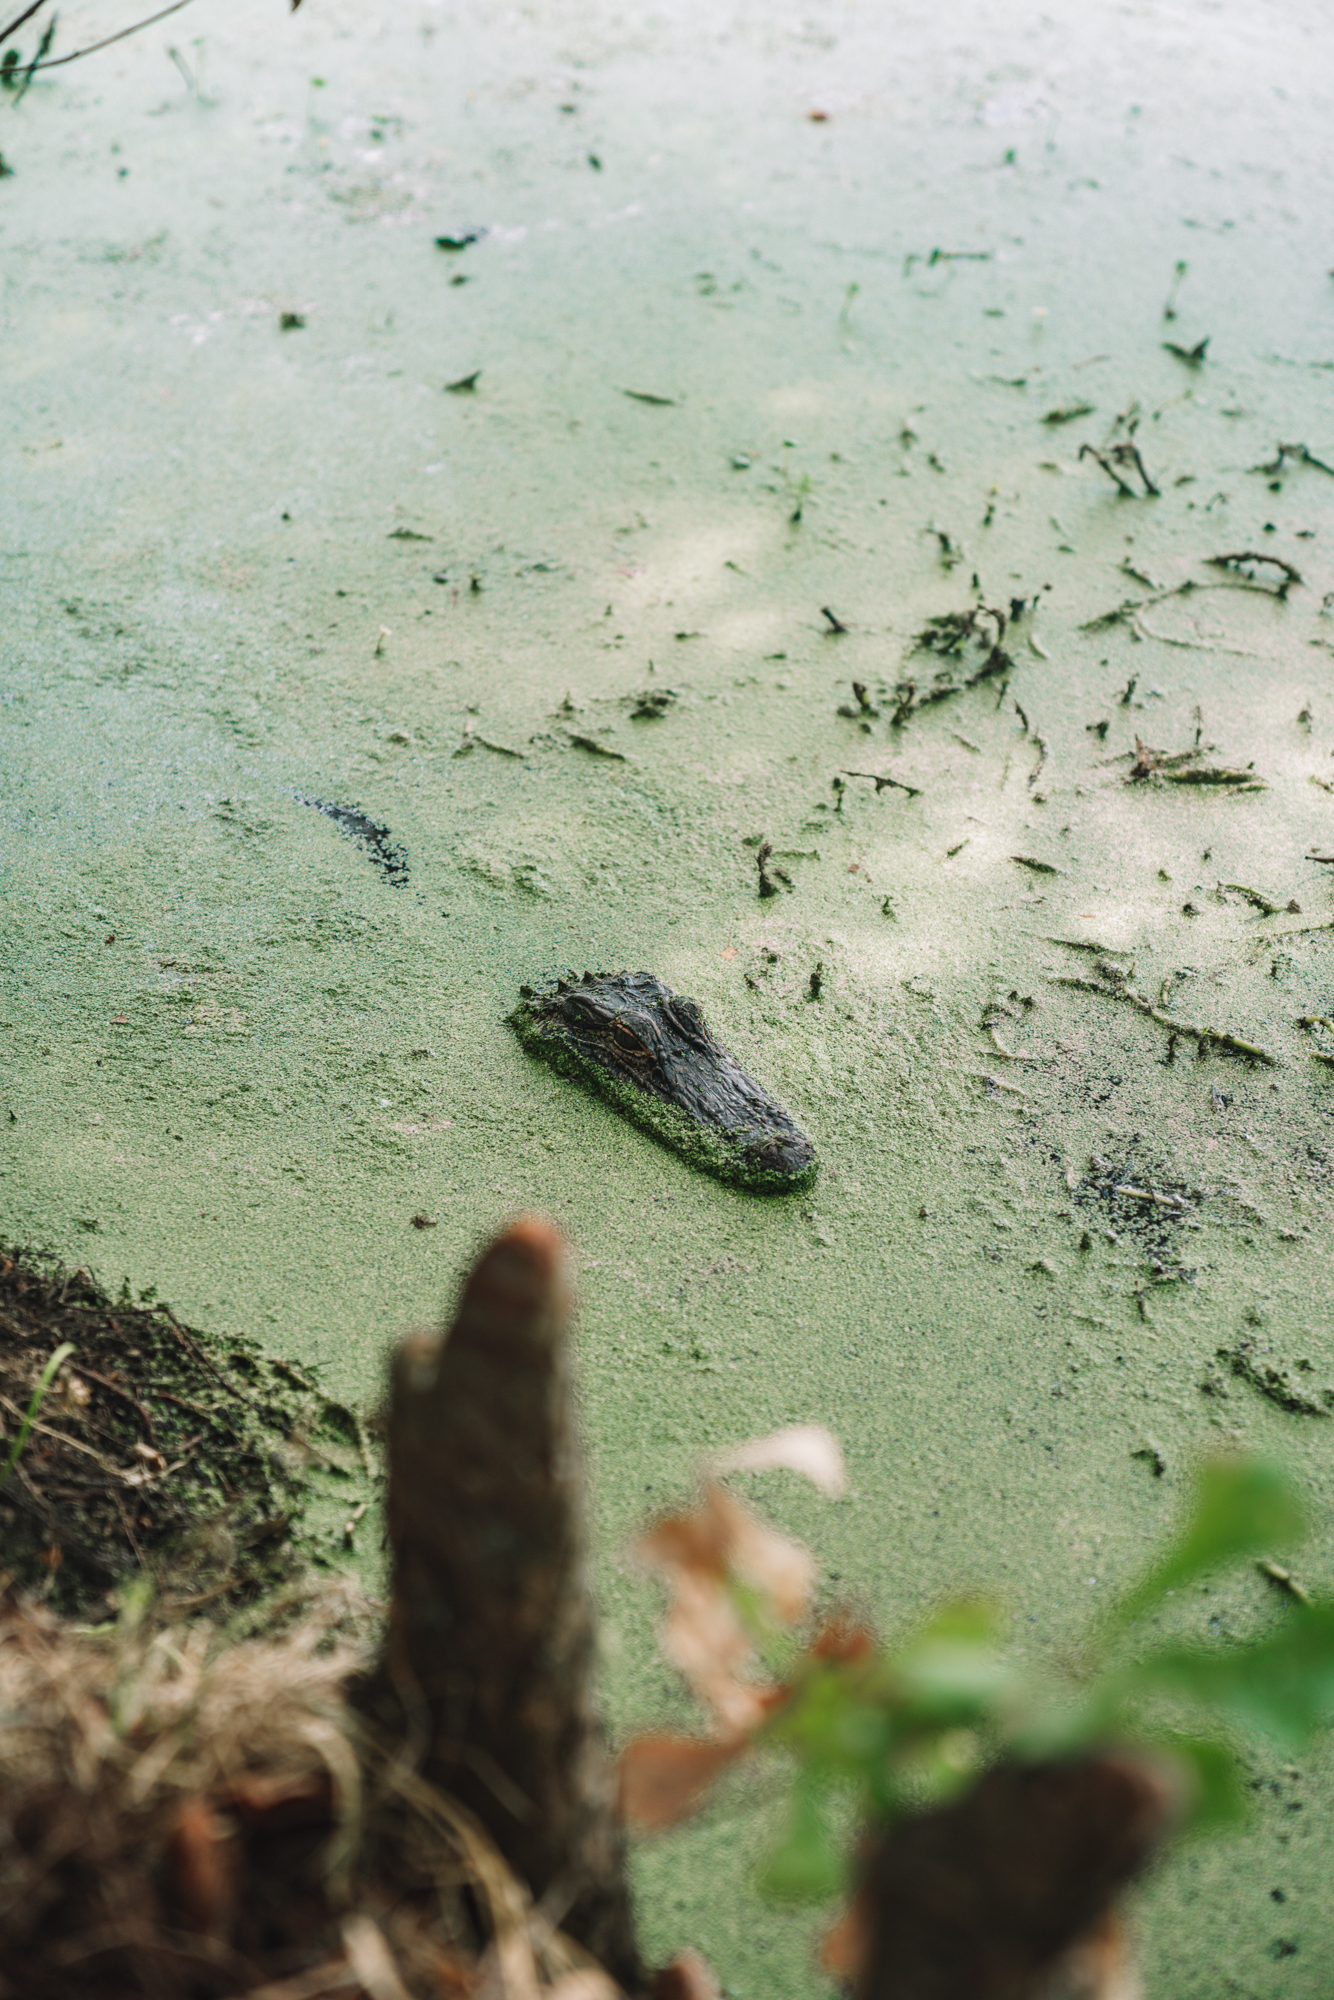 an alligator head peeks through the green duckweed in the swamp.